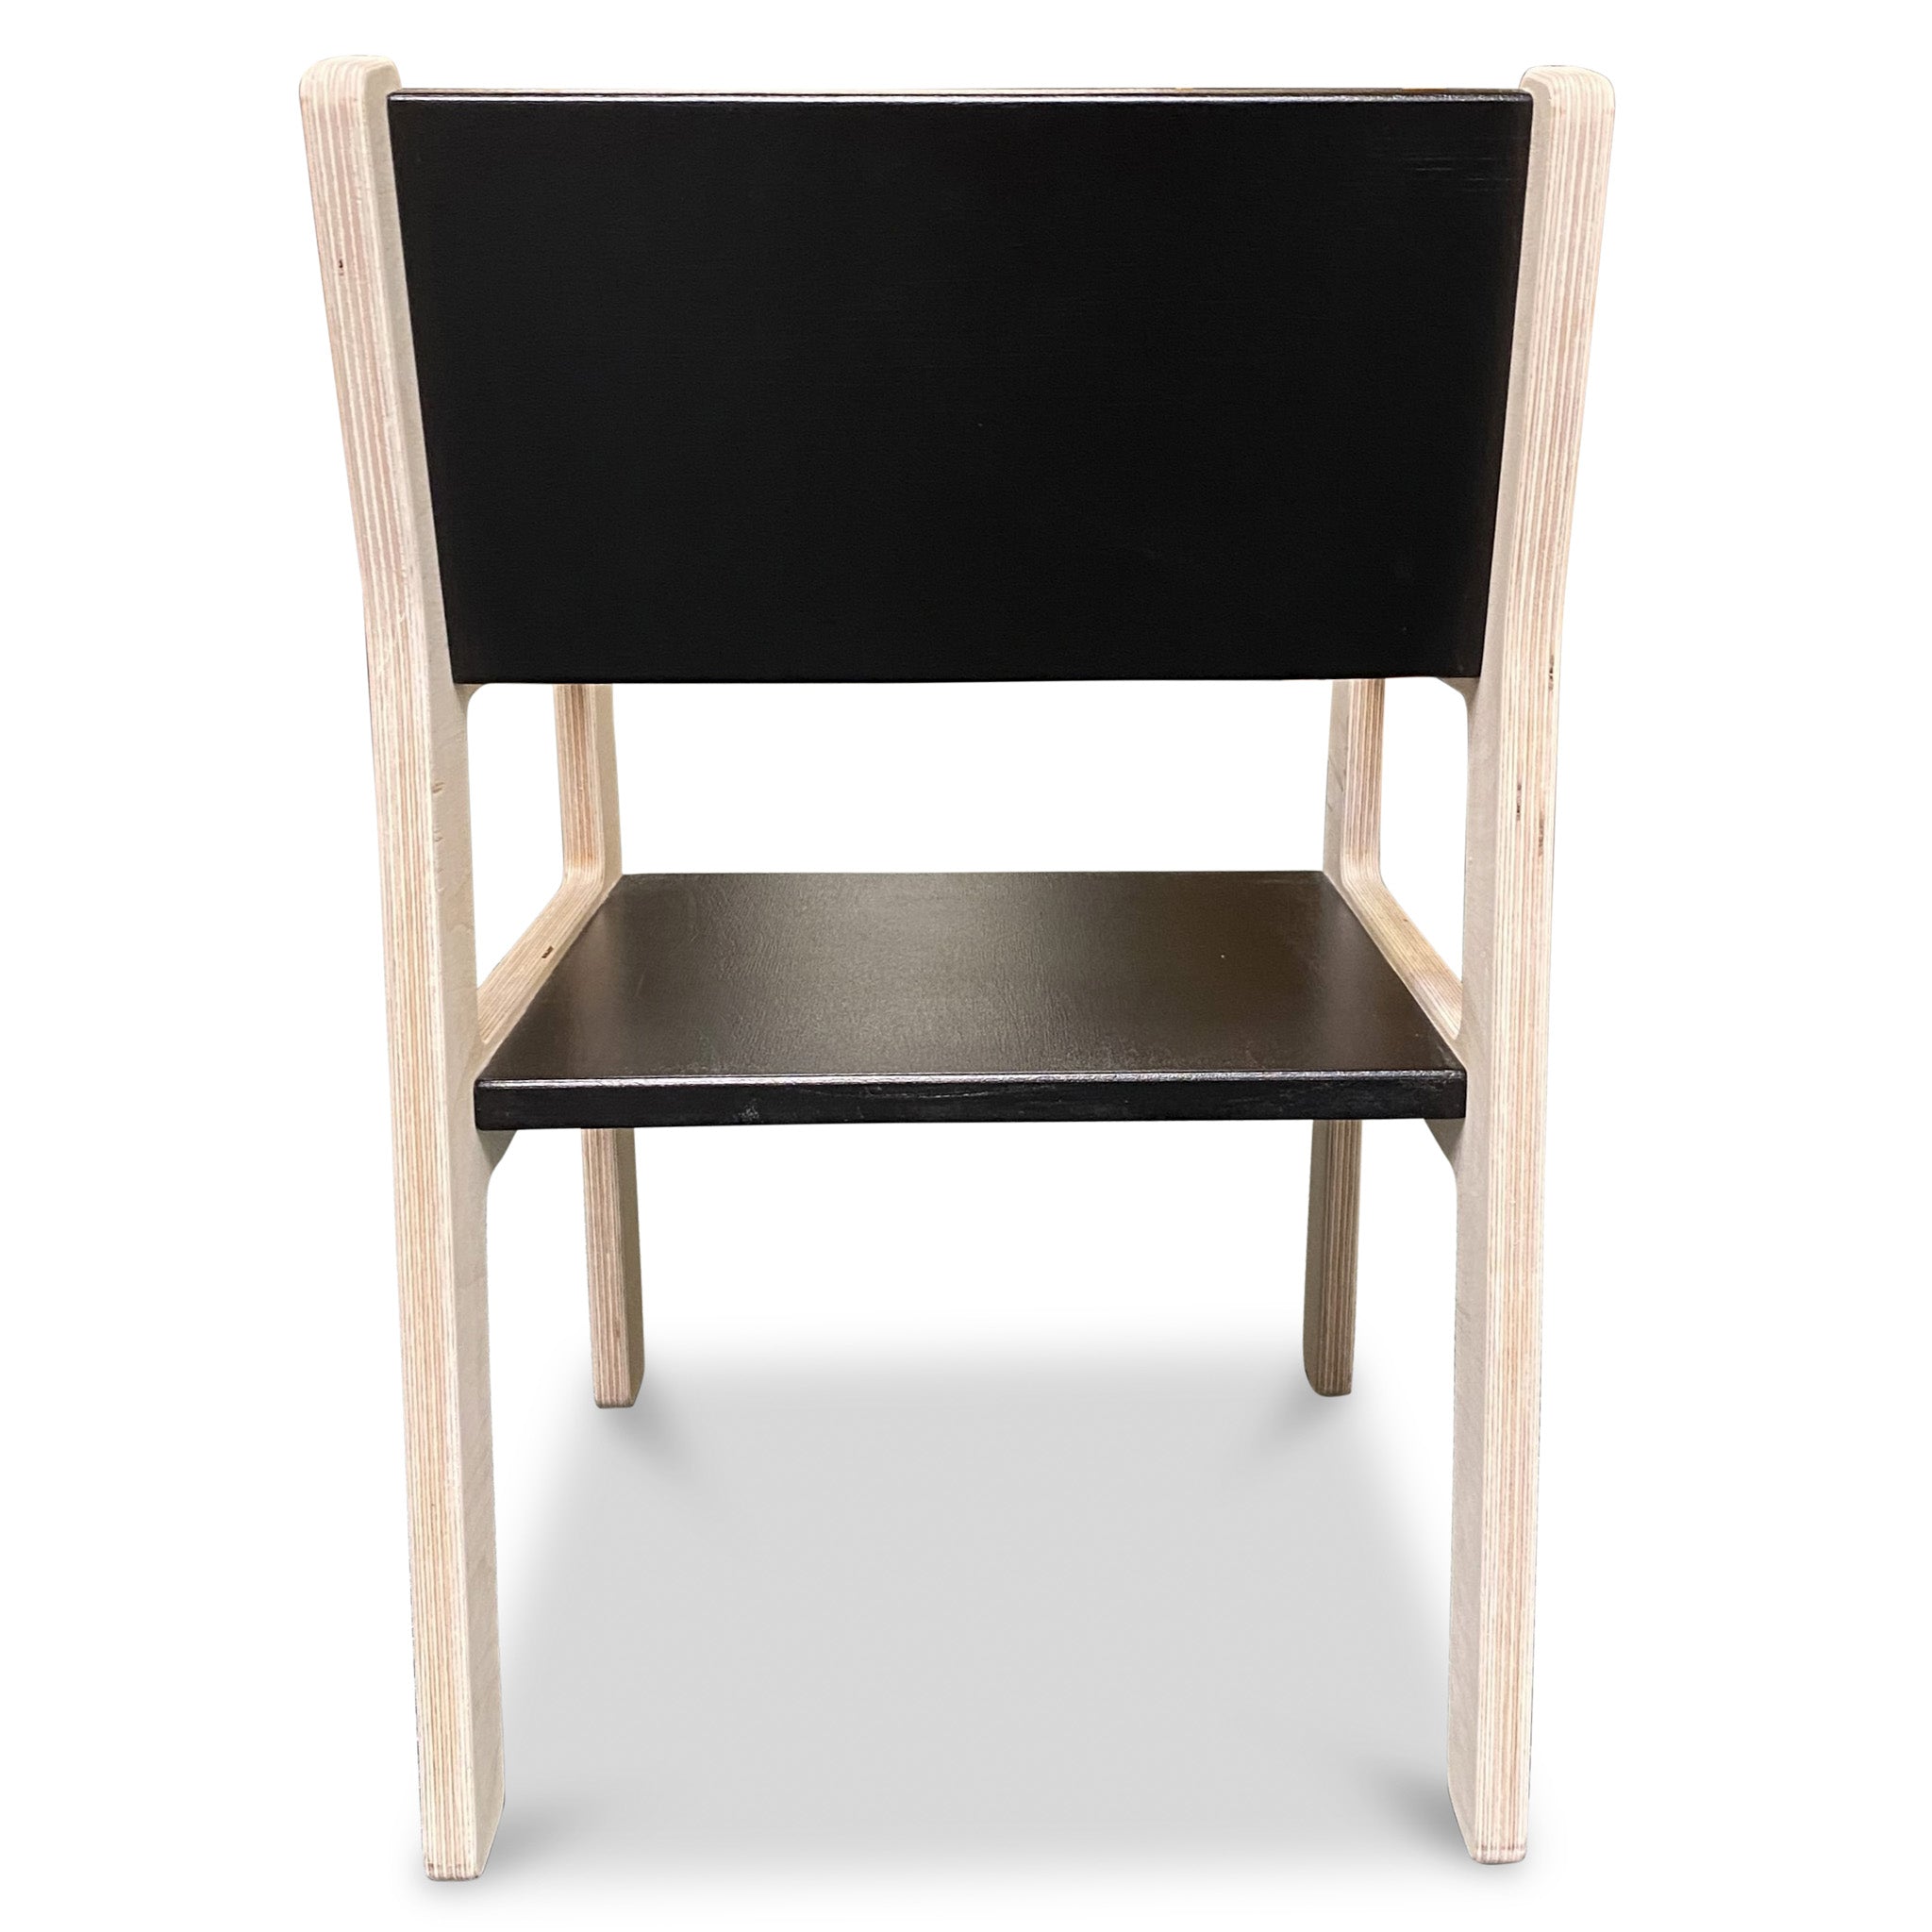 Wooden children’s chair 4-7 years | Toddler seat - black